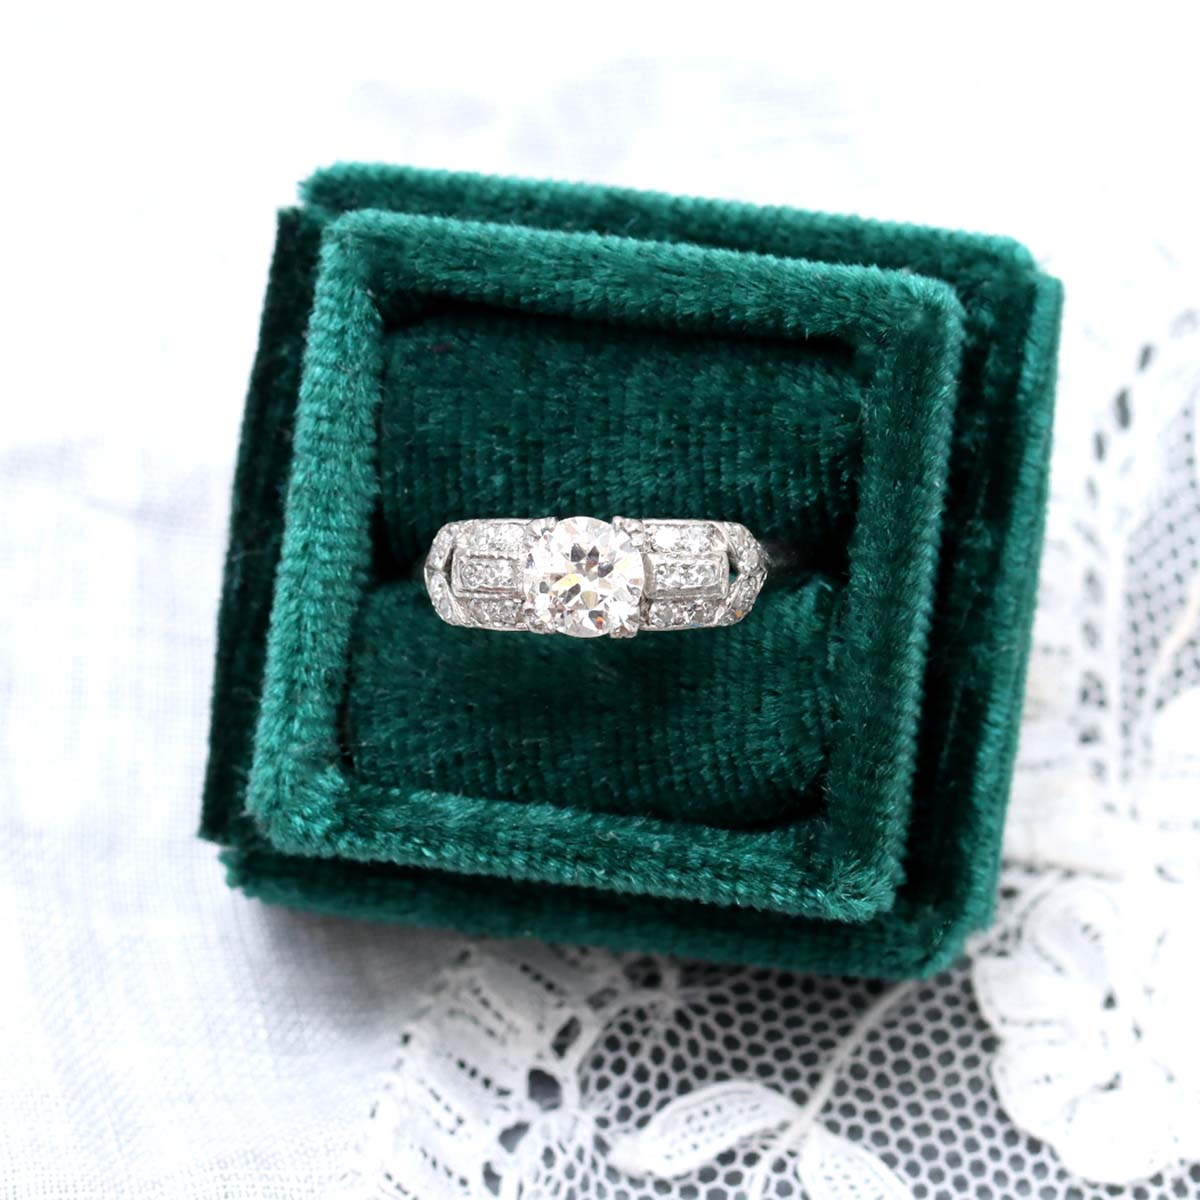 Circa 1930s Engagement Ring #VR181121-3 Default Title